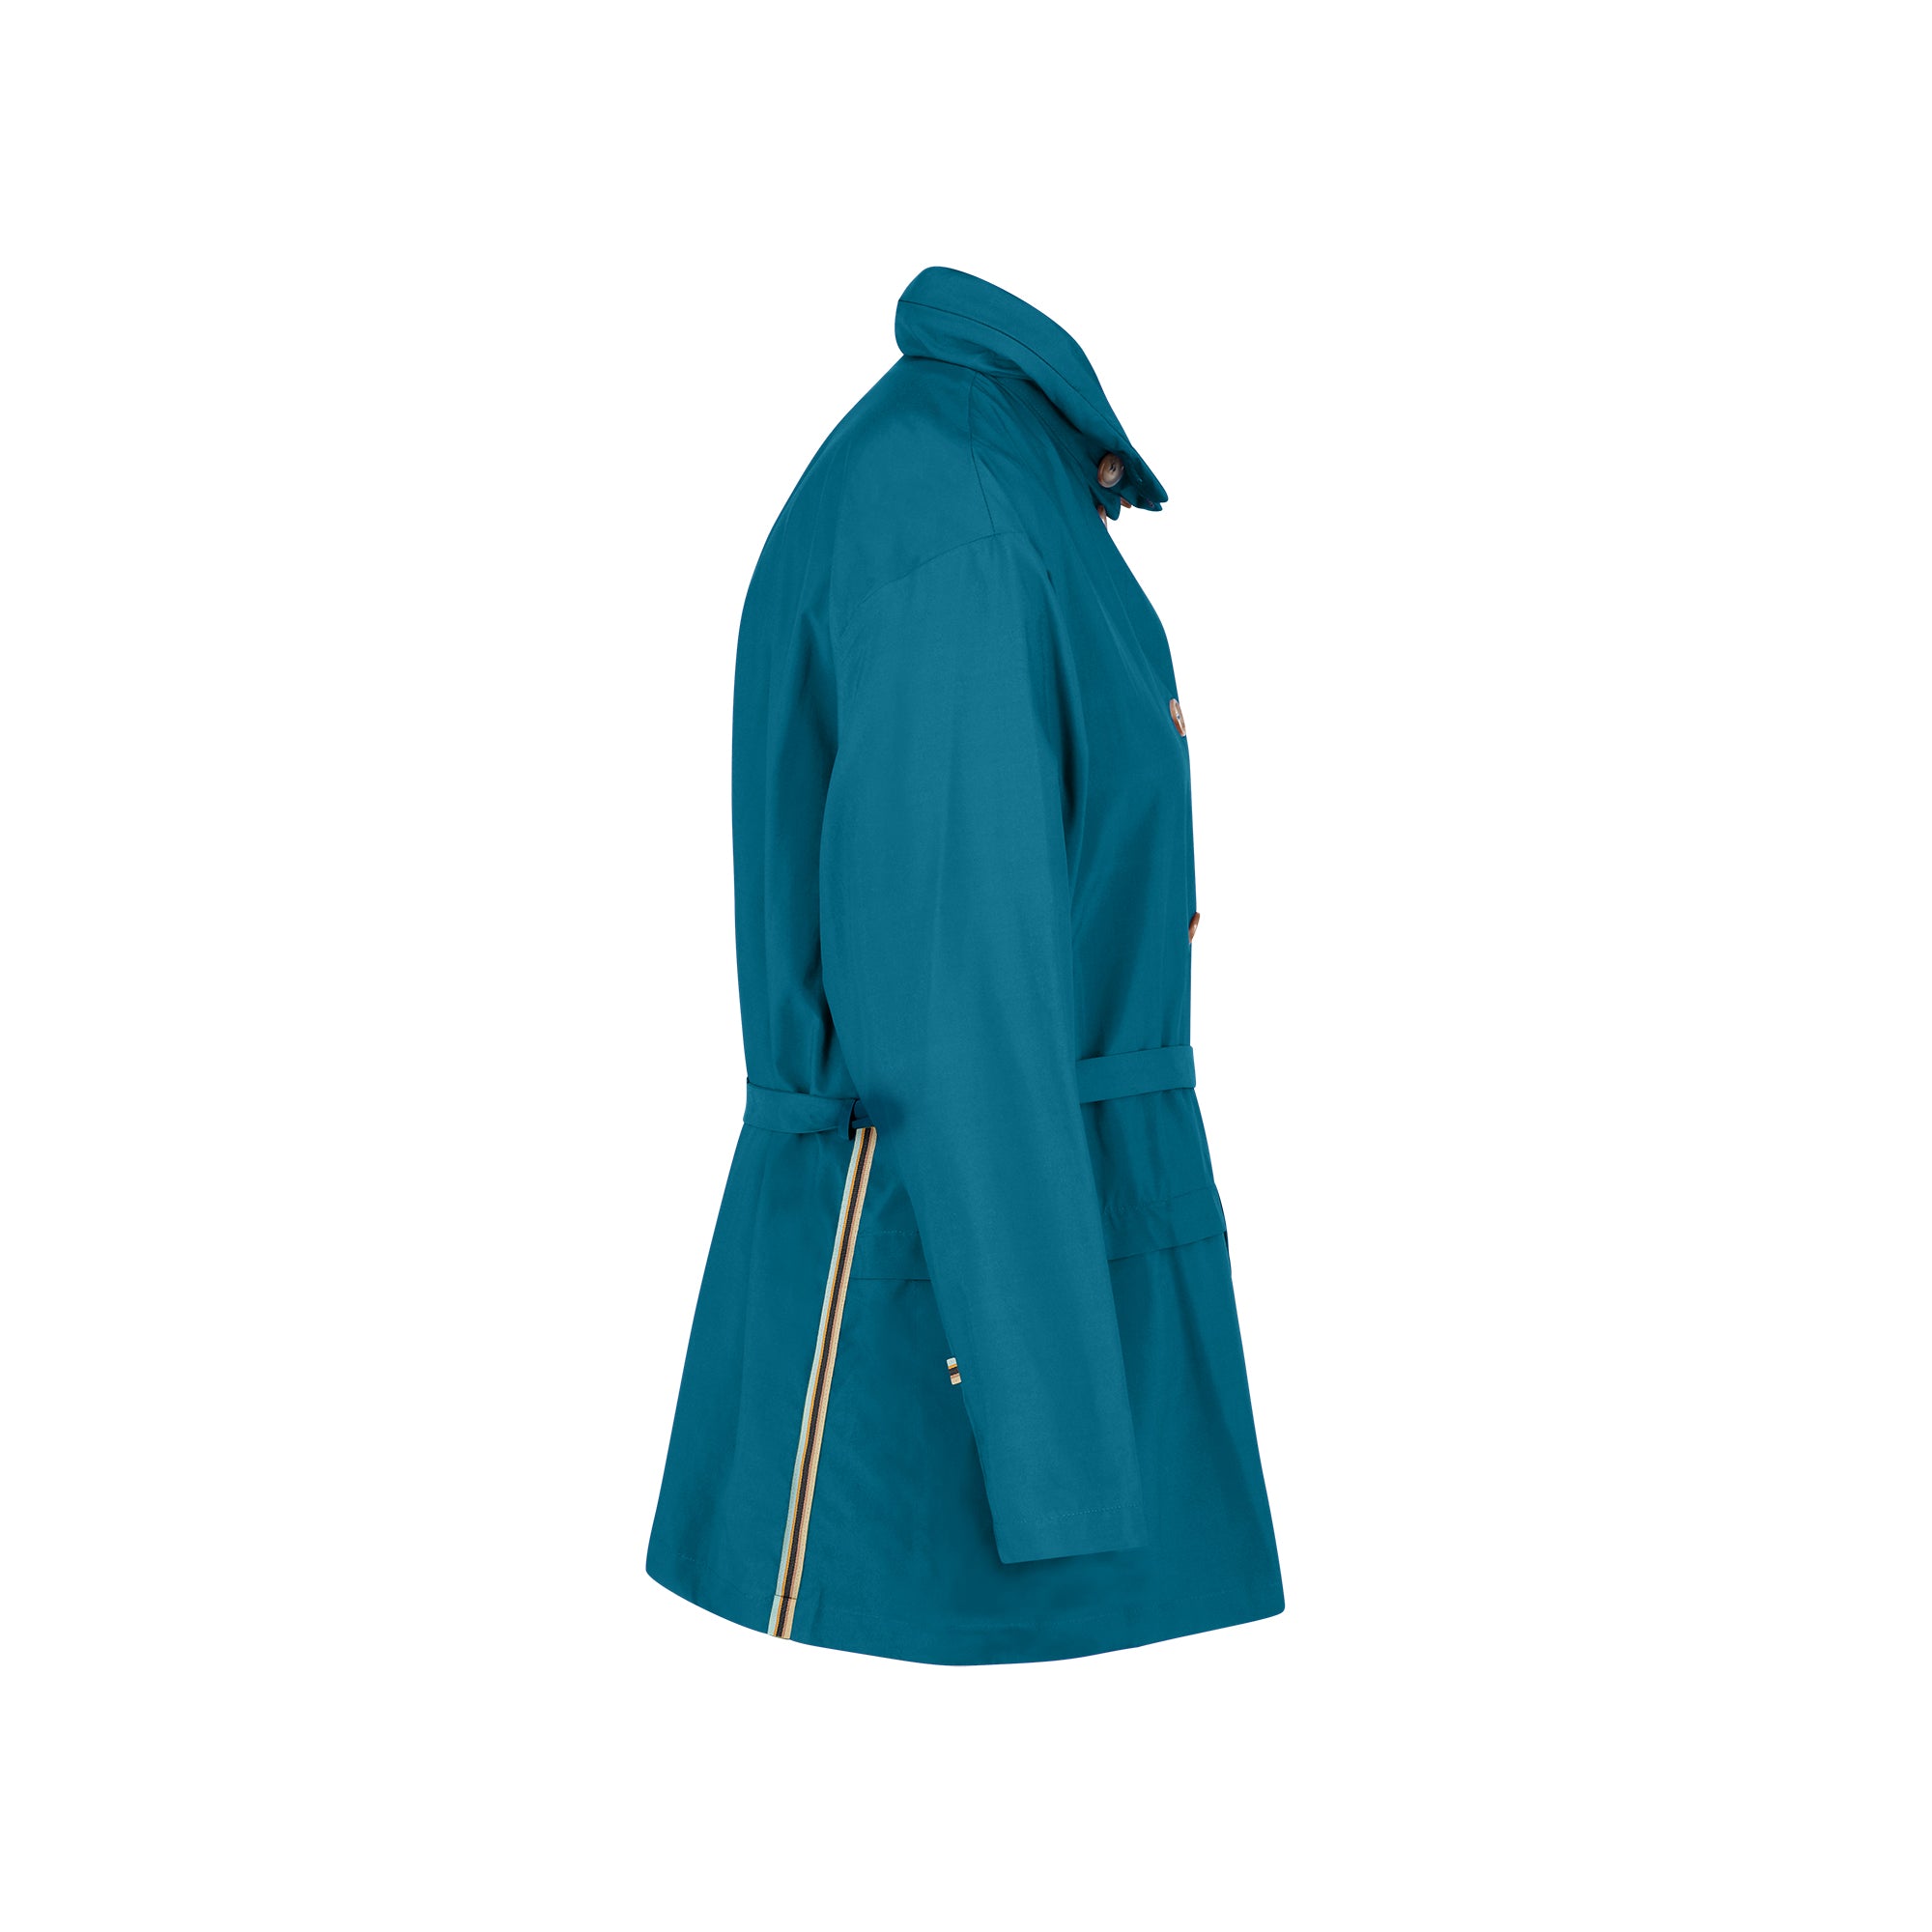 Bise raincoat - Ocean Blue color - side view